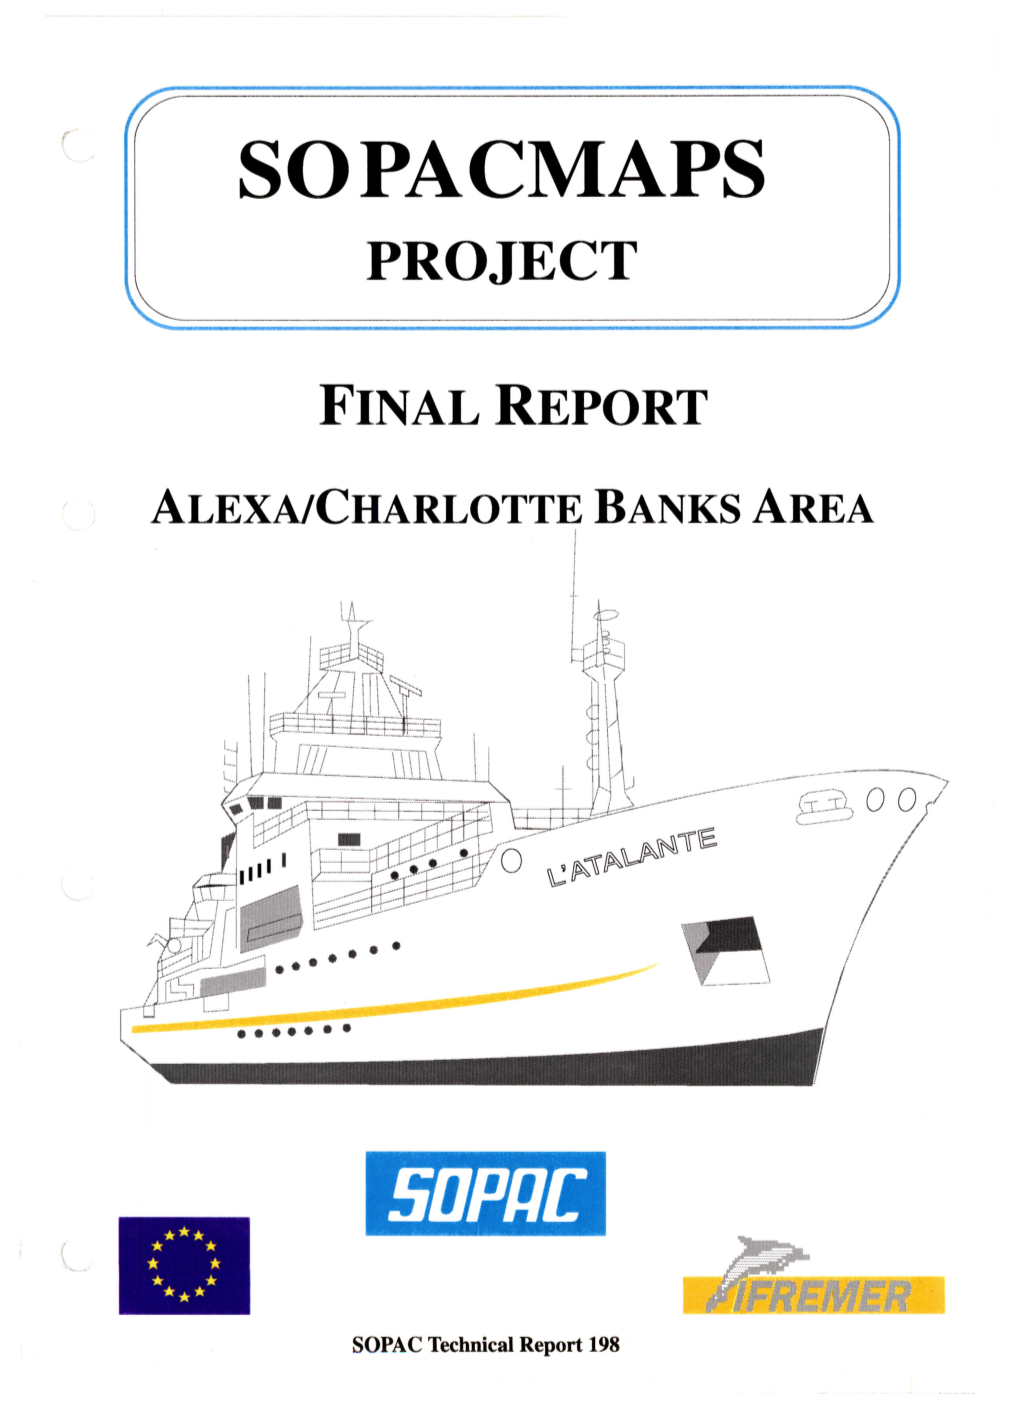 Sopacmaps Project, Final Report, Alexa/Charlotte Banks Area